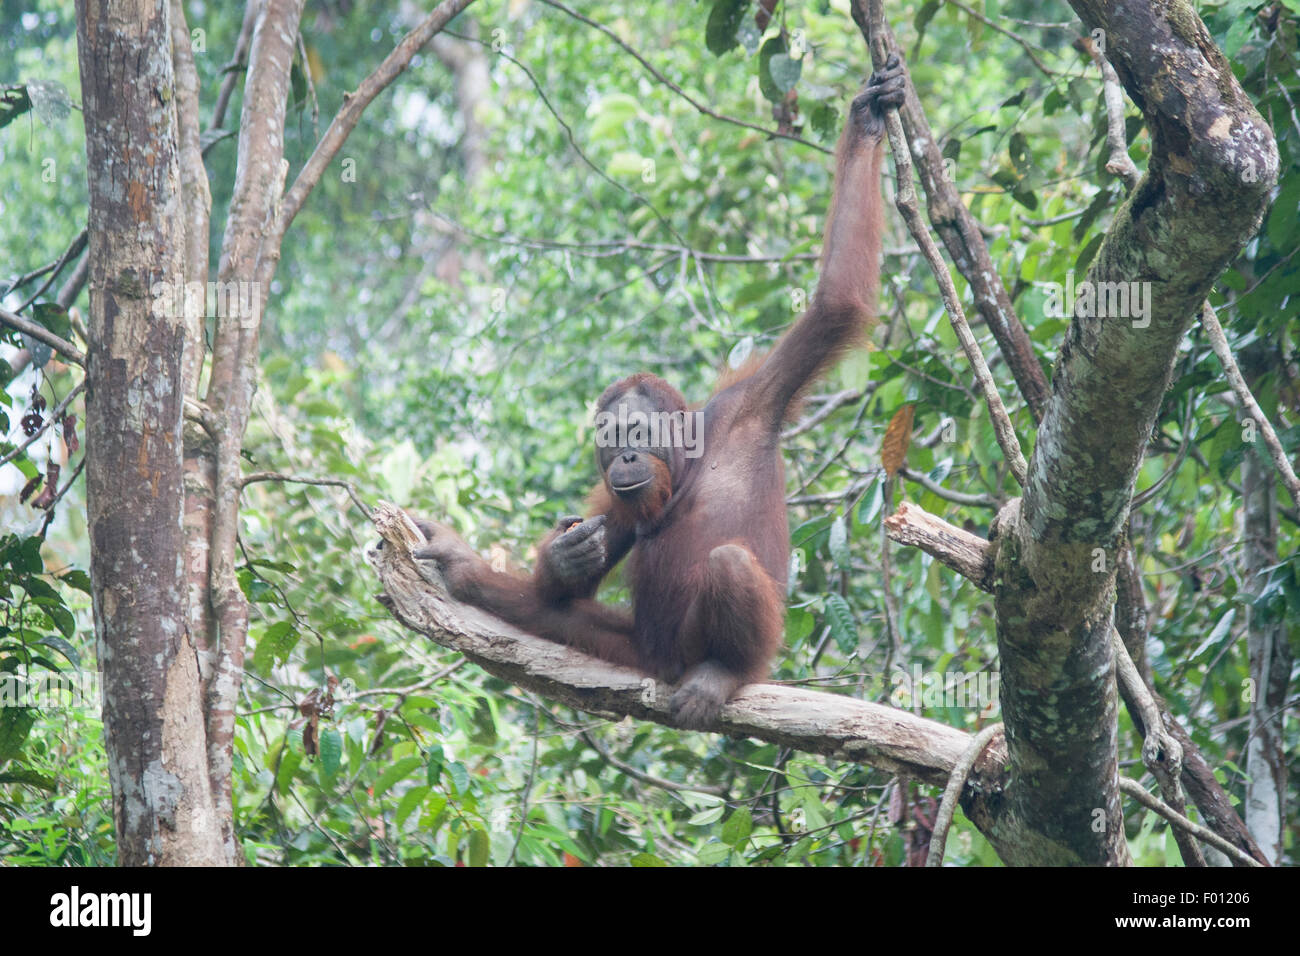 Orang-outan dans un arbre. Banque D'Images